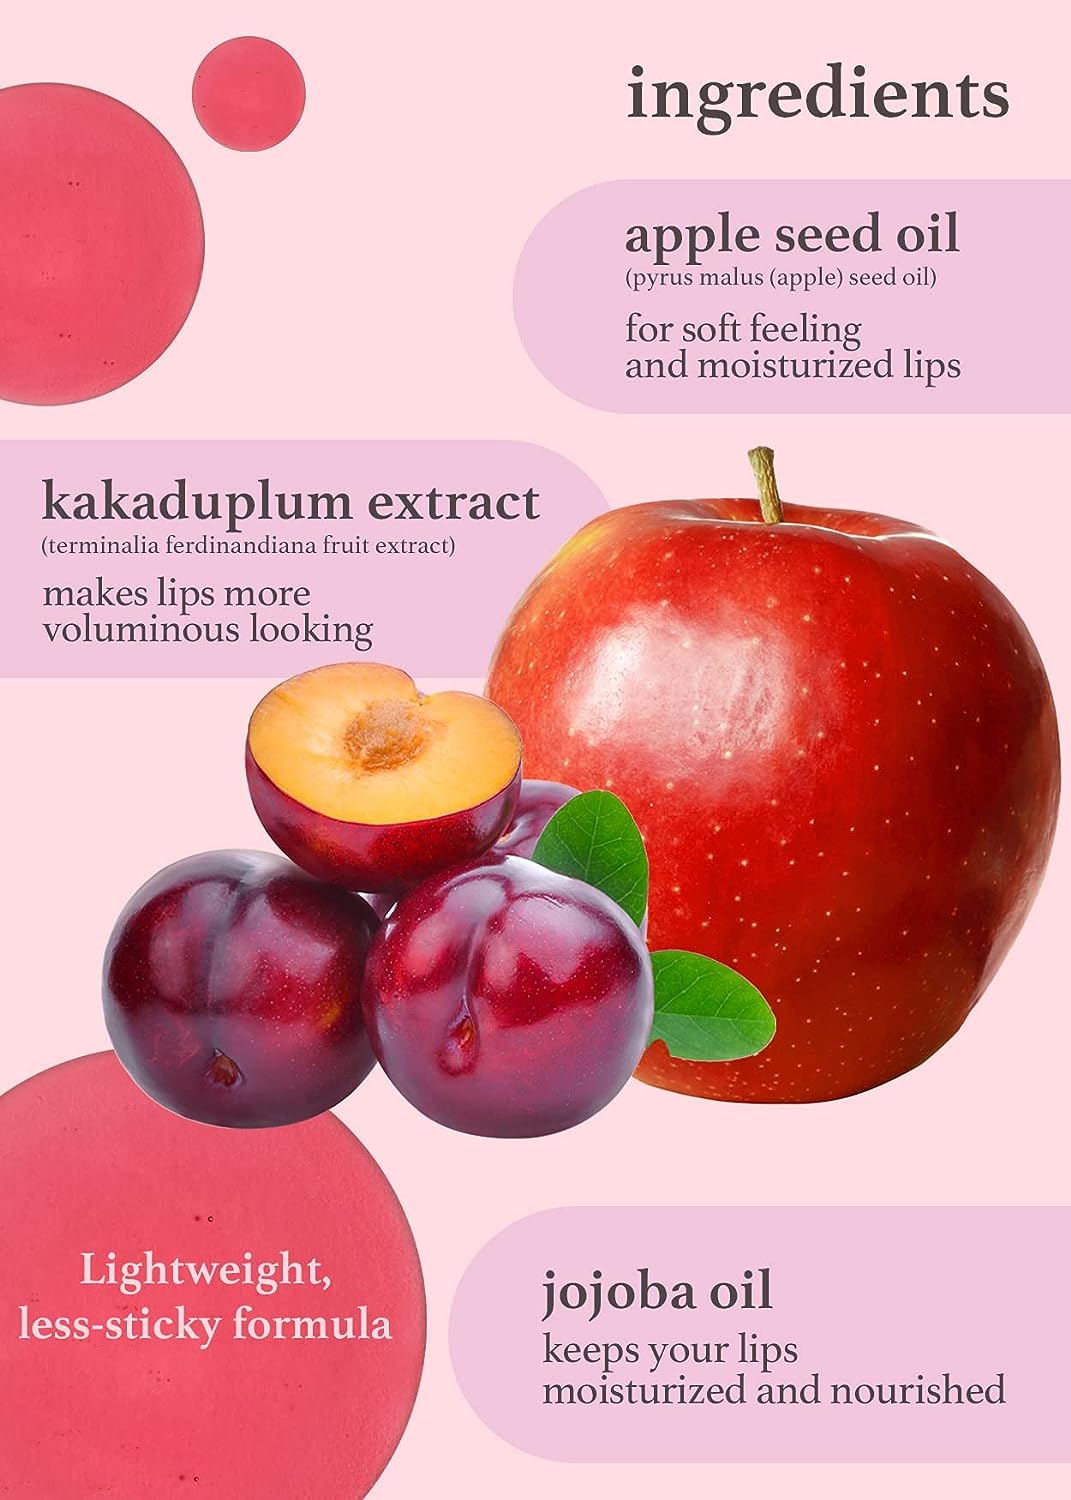 appleseed lip oil duo (applecherry & appleplum)